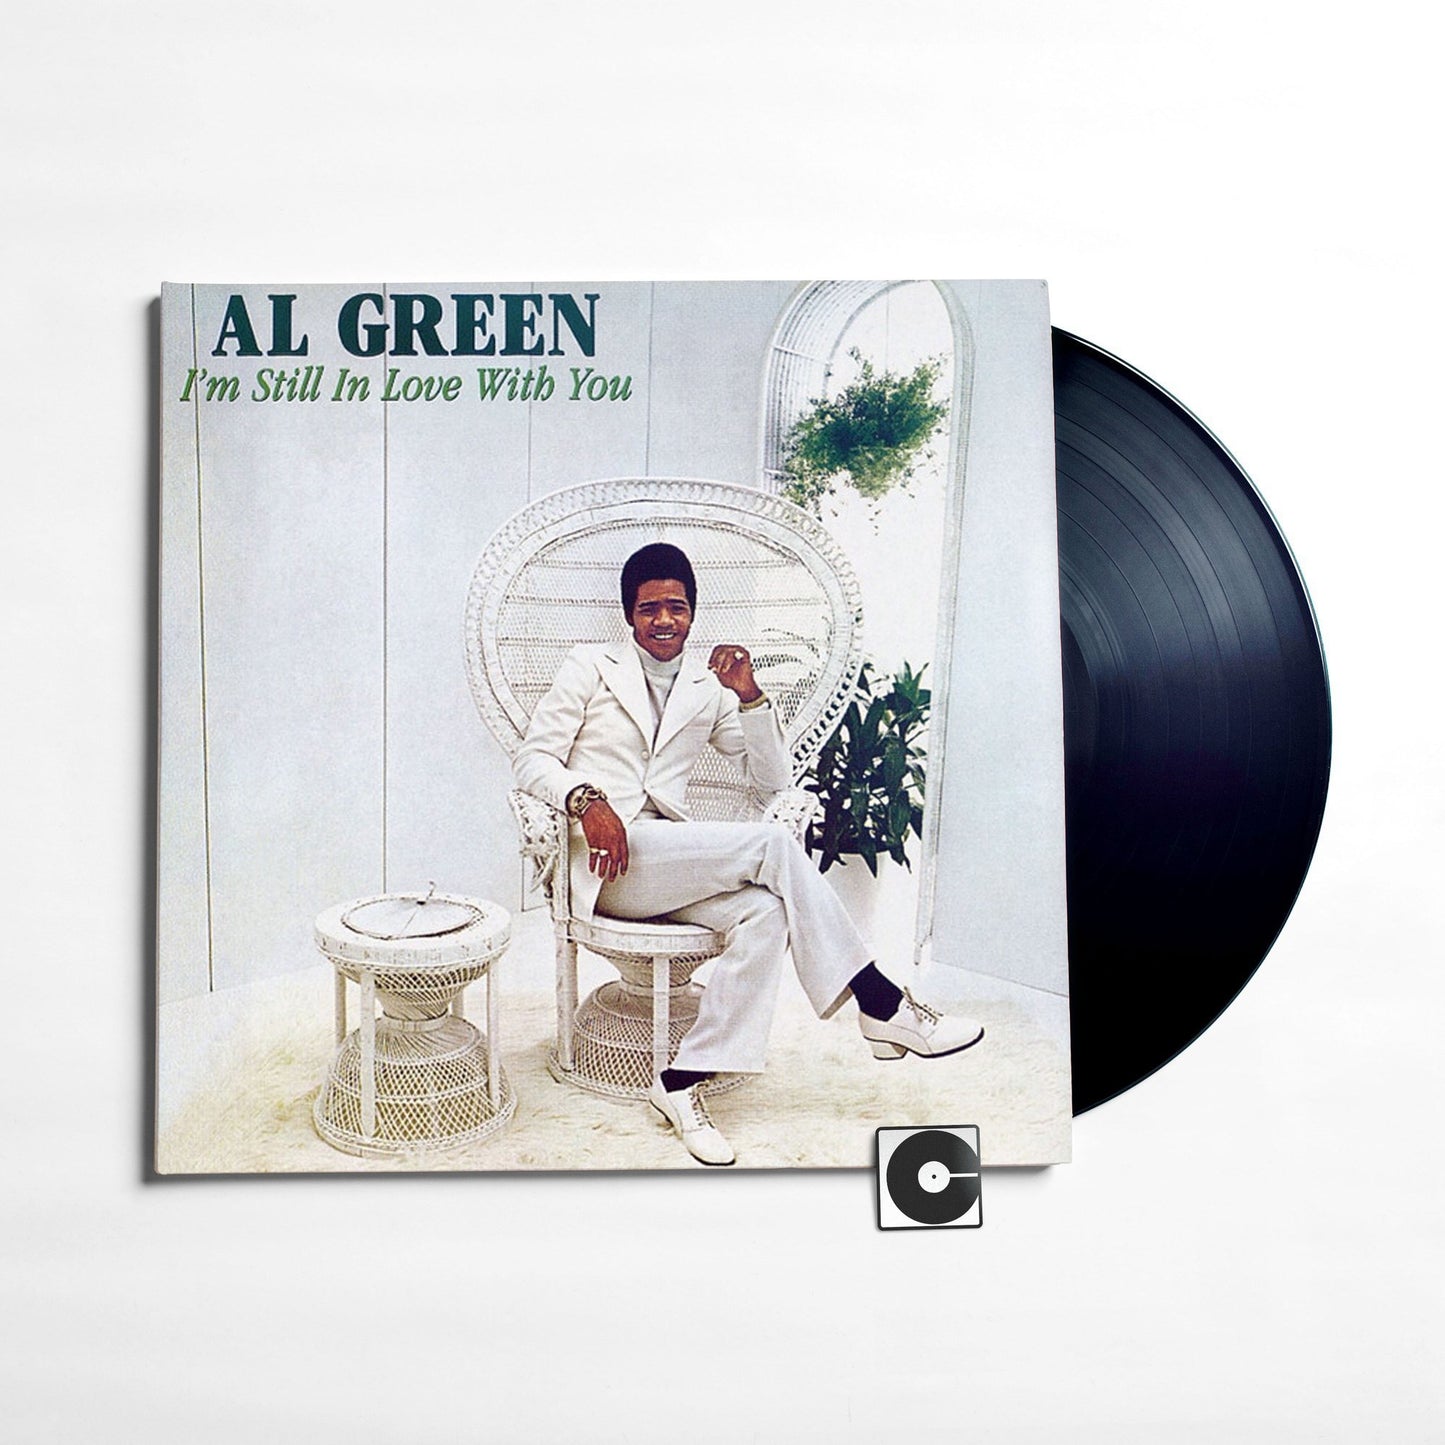 Al Green - "I'm Still In Love With You"